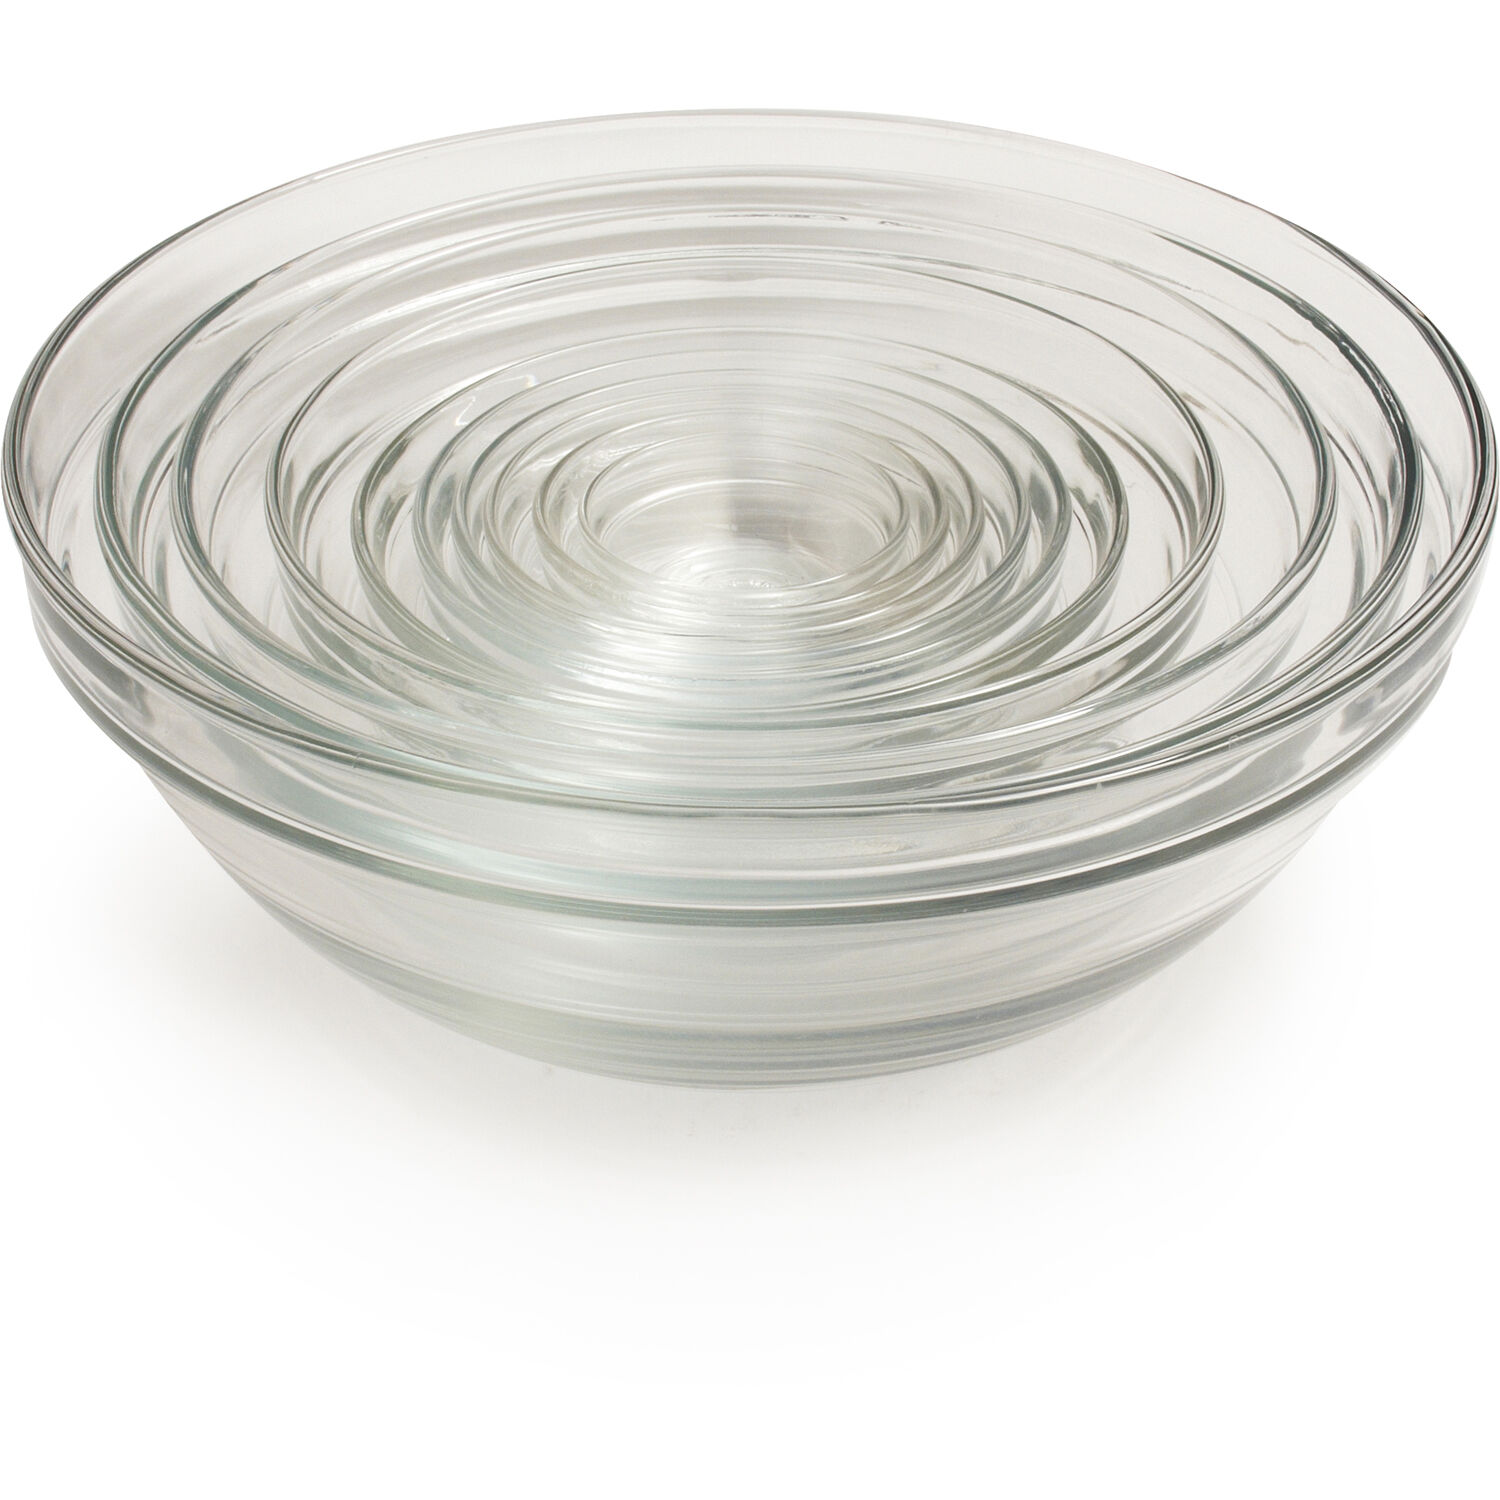 Single Duralex 17 cm Lys Clear Bowl